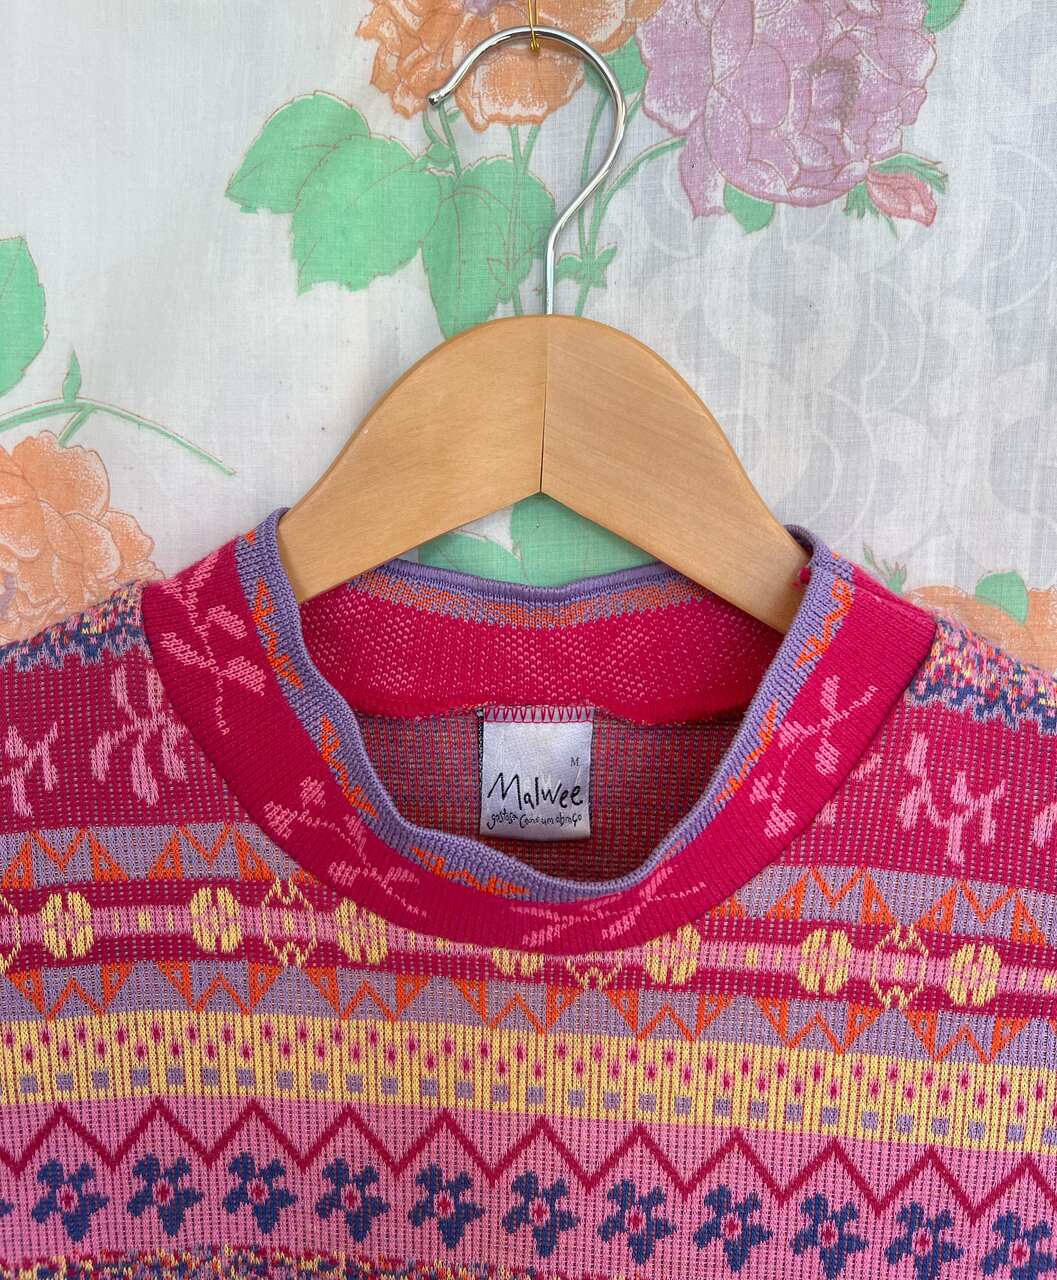 Malwee Vintage Pink Ethnic Shirt